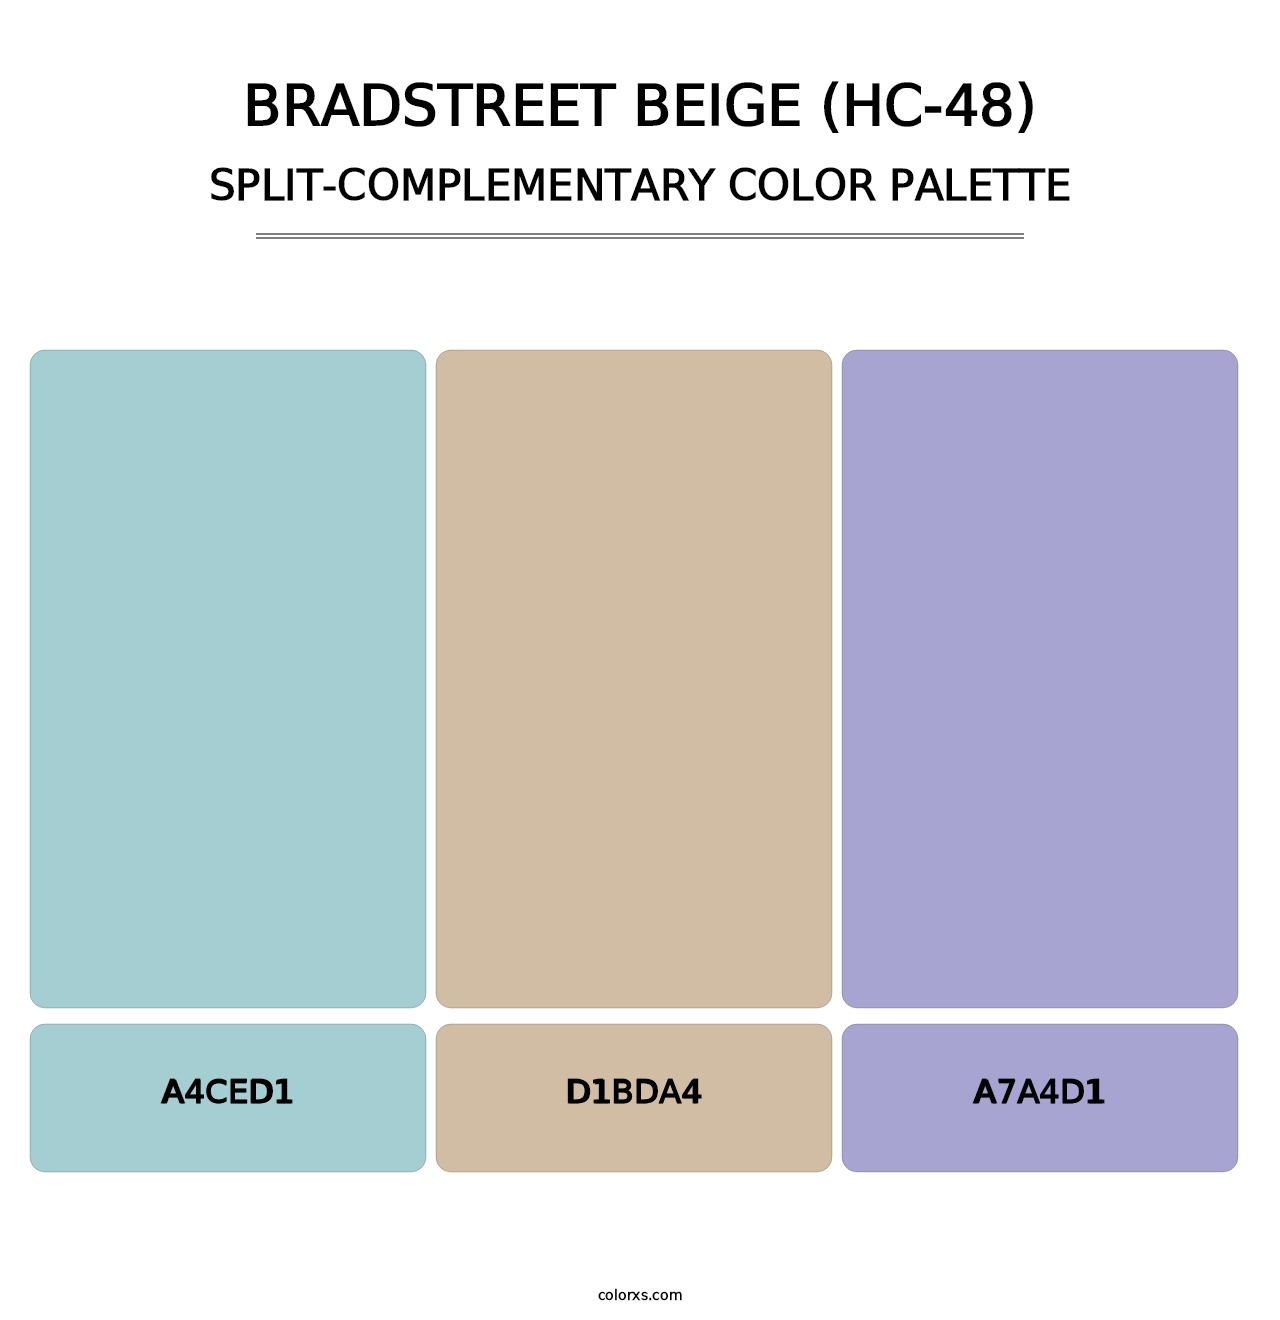 Bradstreet Beige (HC-48) - Split-Complementary Color Palette